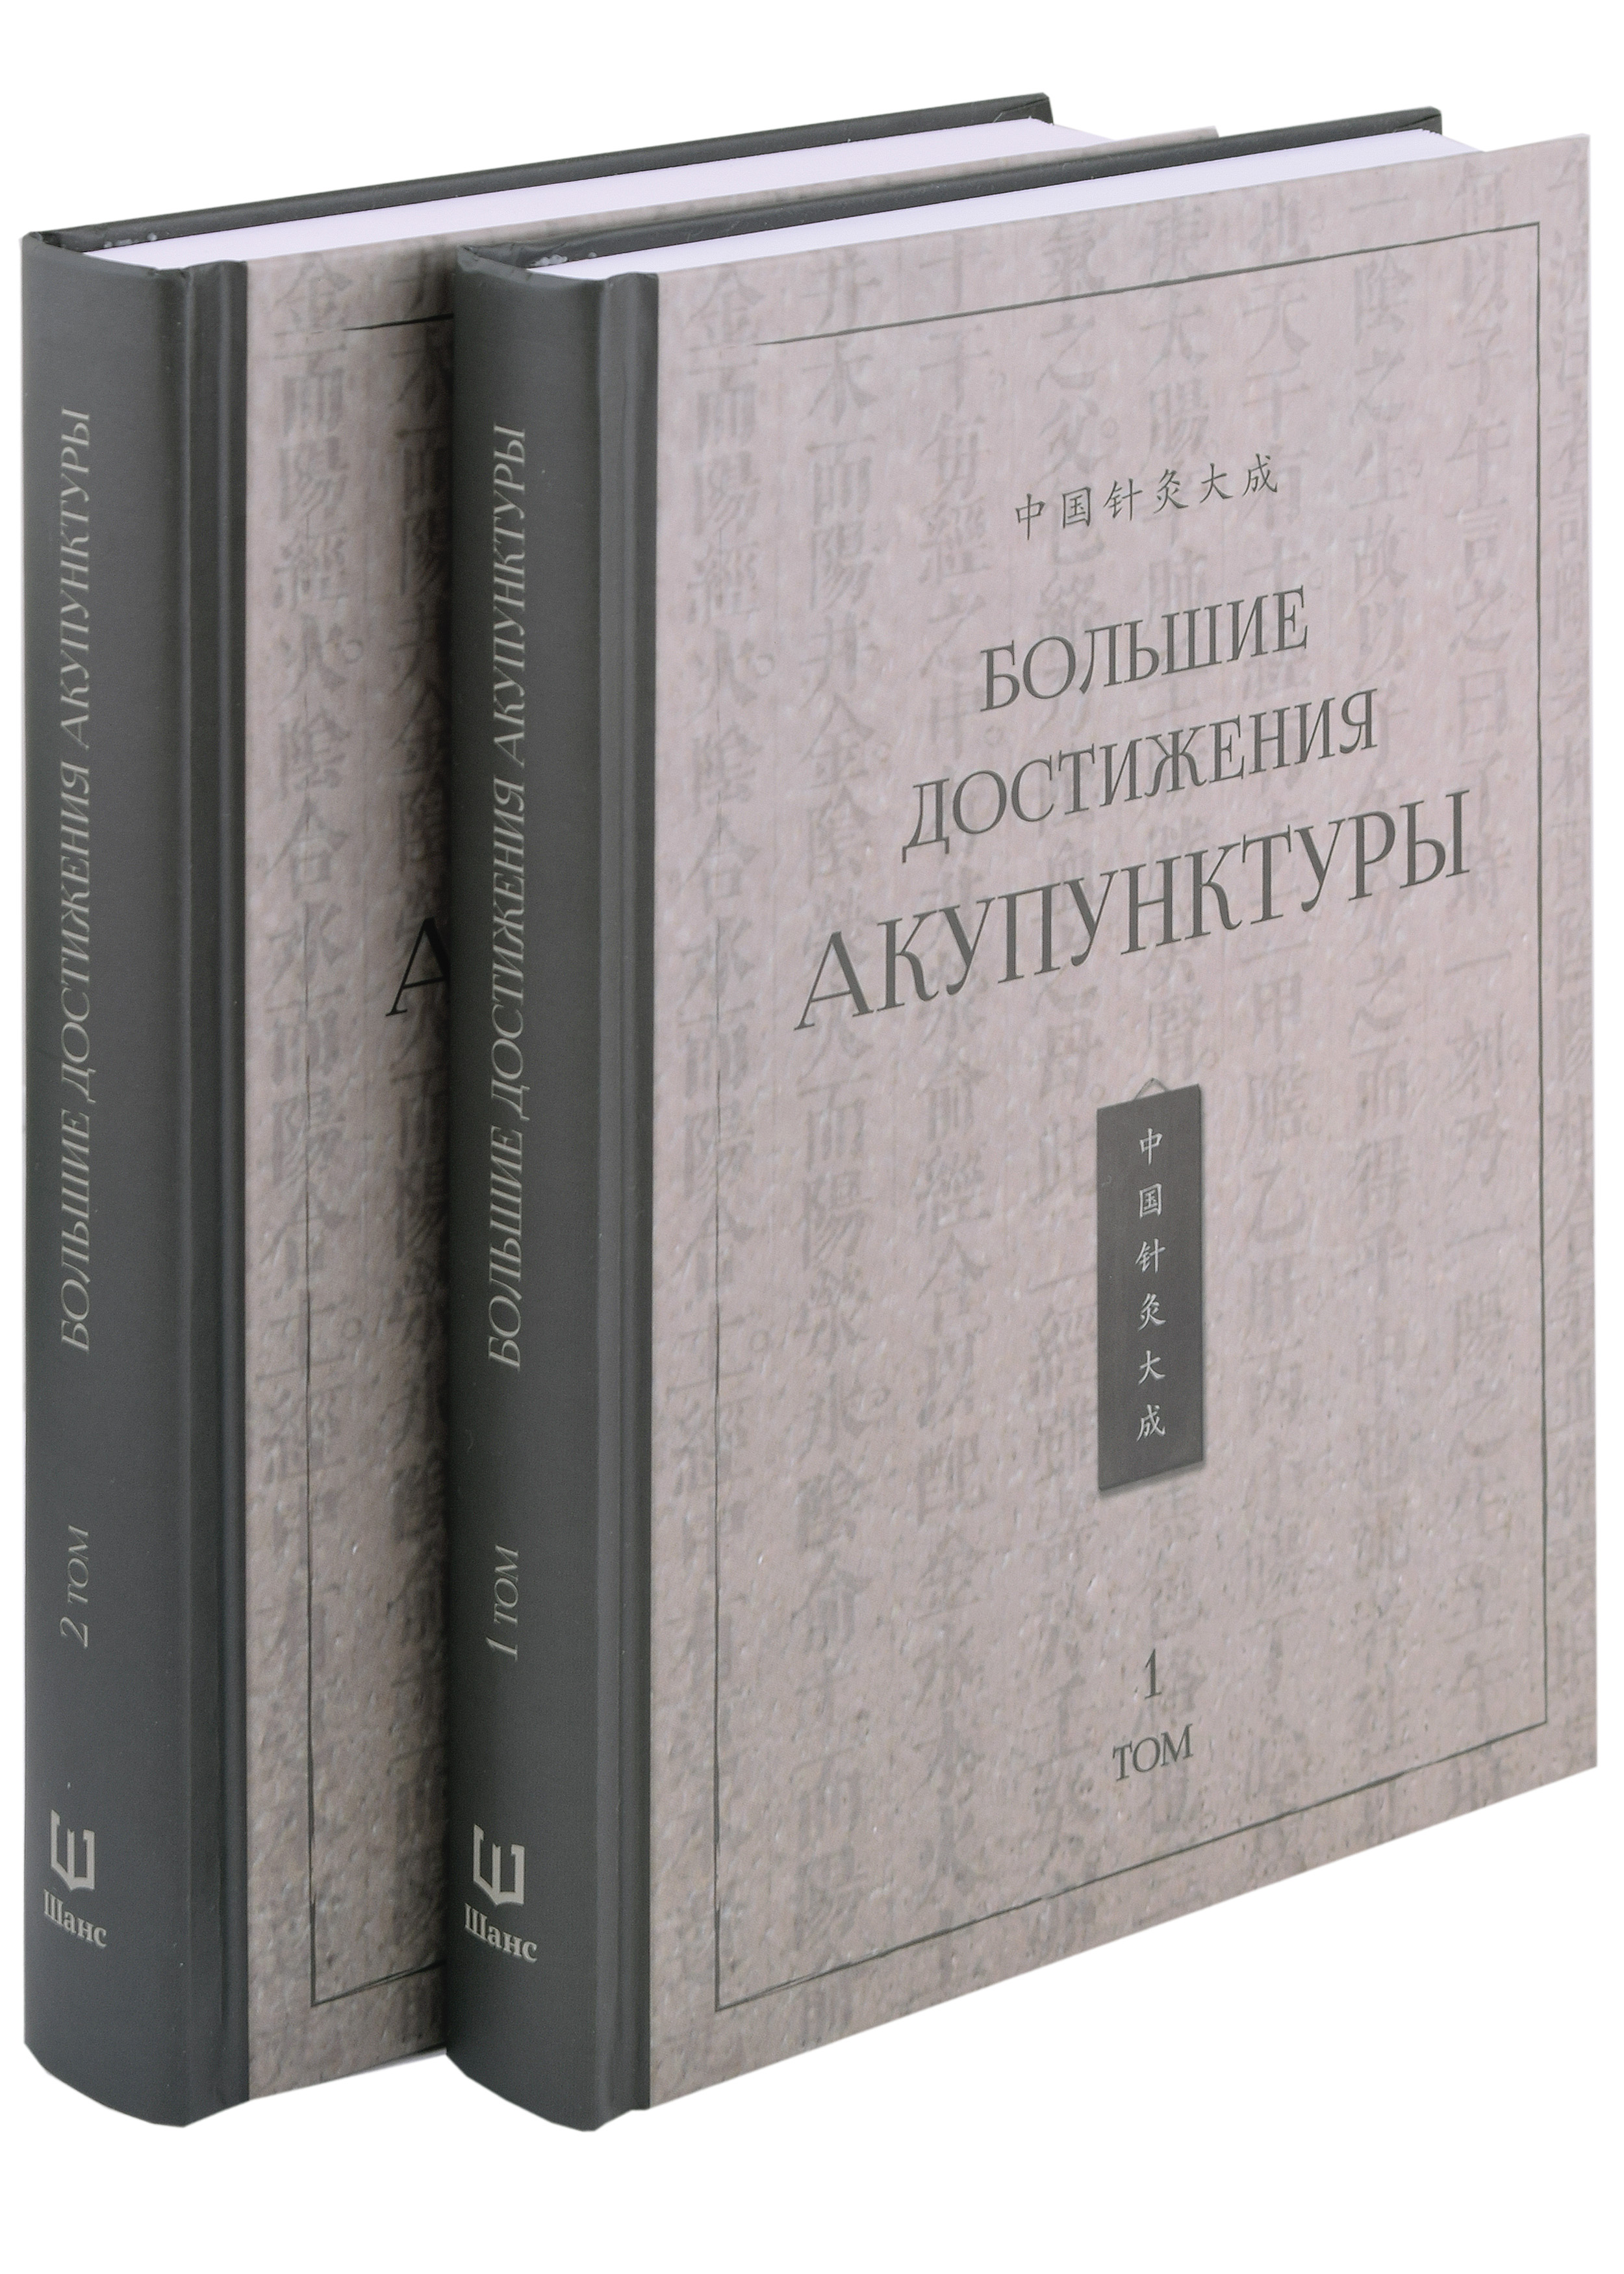 Большие достижения акупунктуры: в 2-х томах (комплект из 2-х книг) чичерин б н воспоминания в 2 х томах комплект из 2 х книг